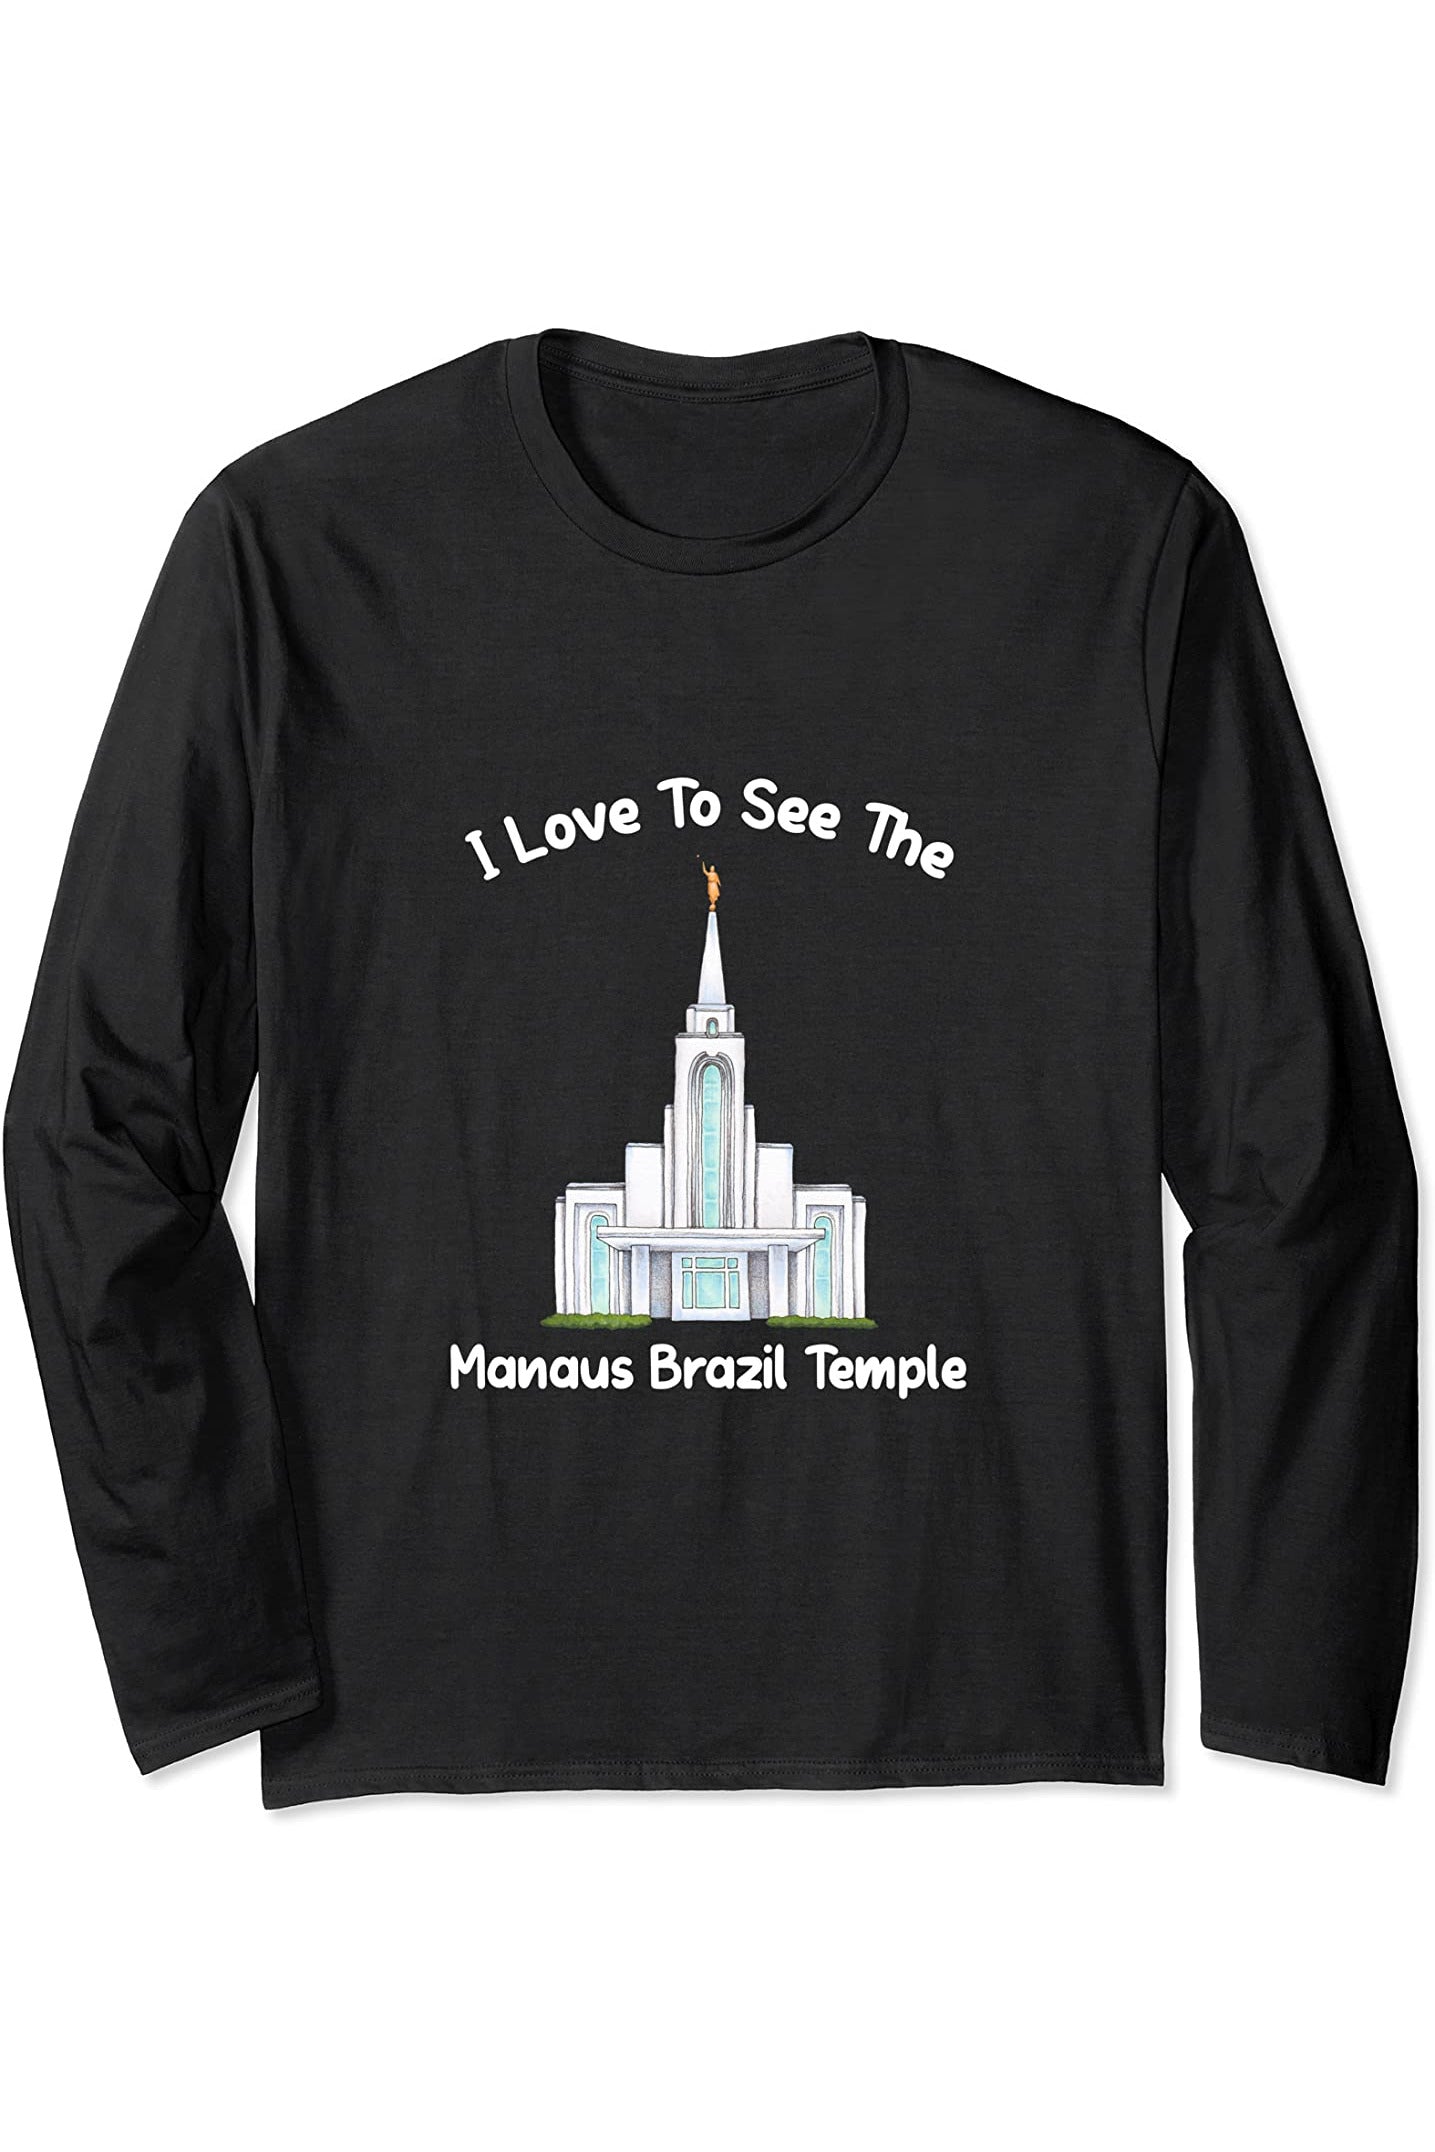 Manaus Brazil Temple Long Sleeve T-Shirt - Primary Style (English) US